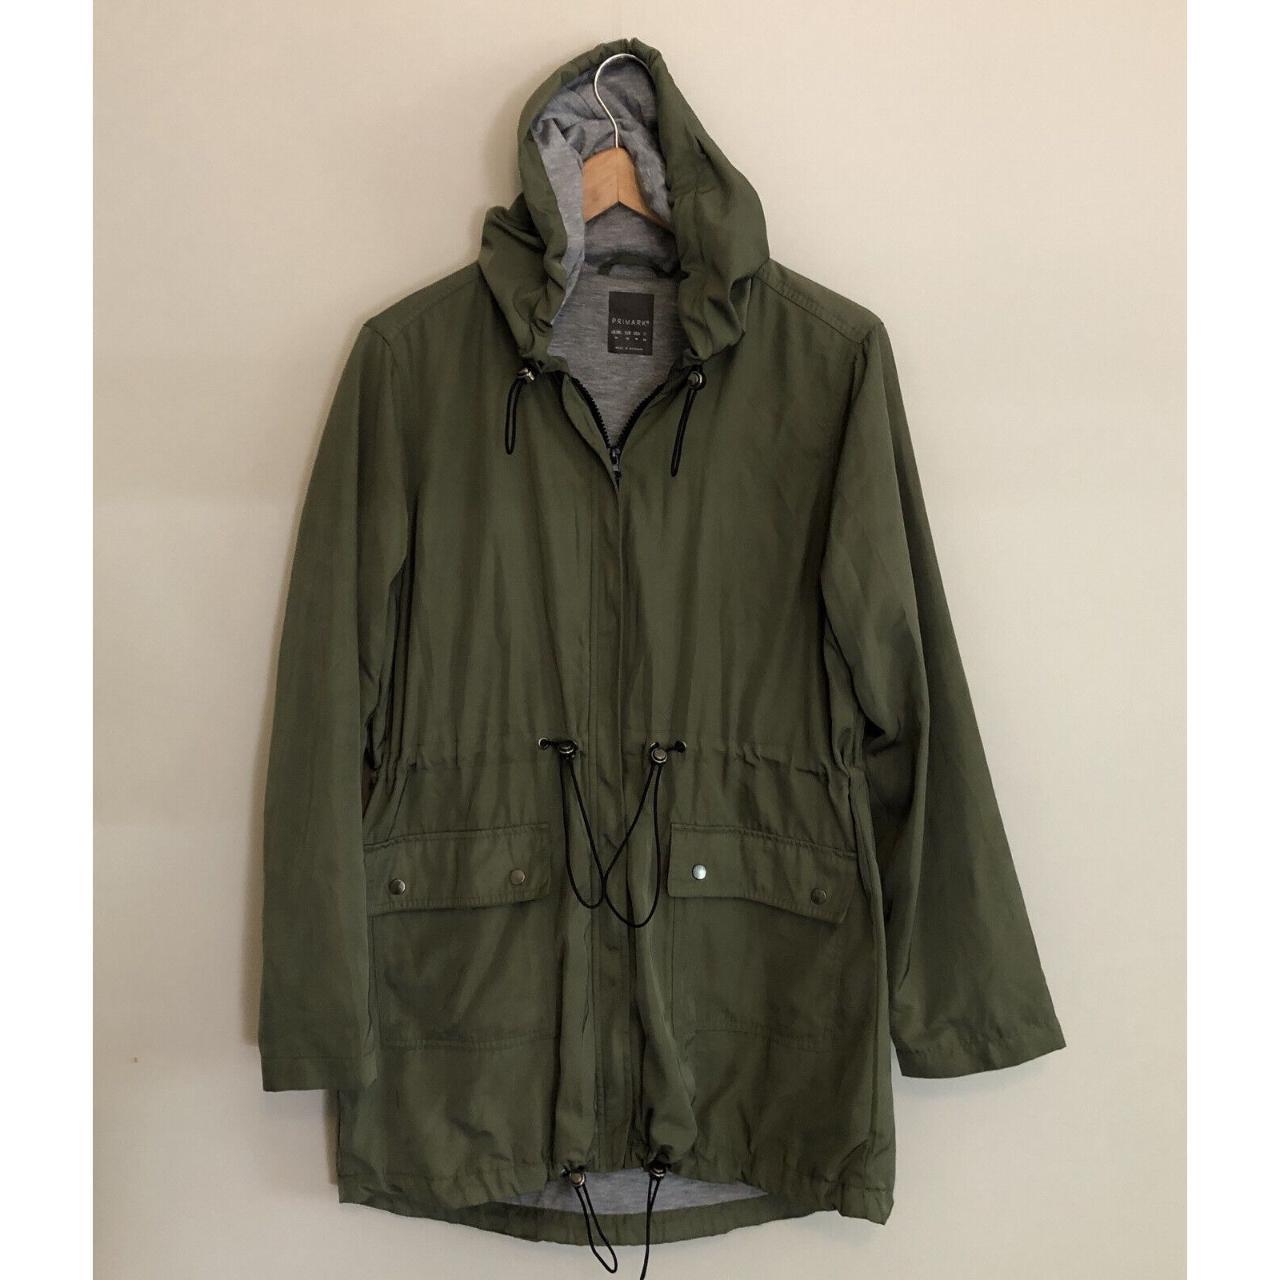 Product Image 1 - Primark Hooded Rain Jacket Windbreaker
Army